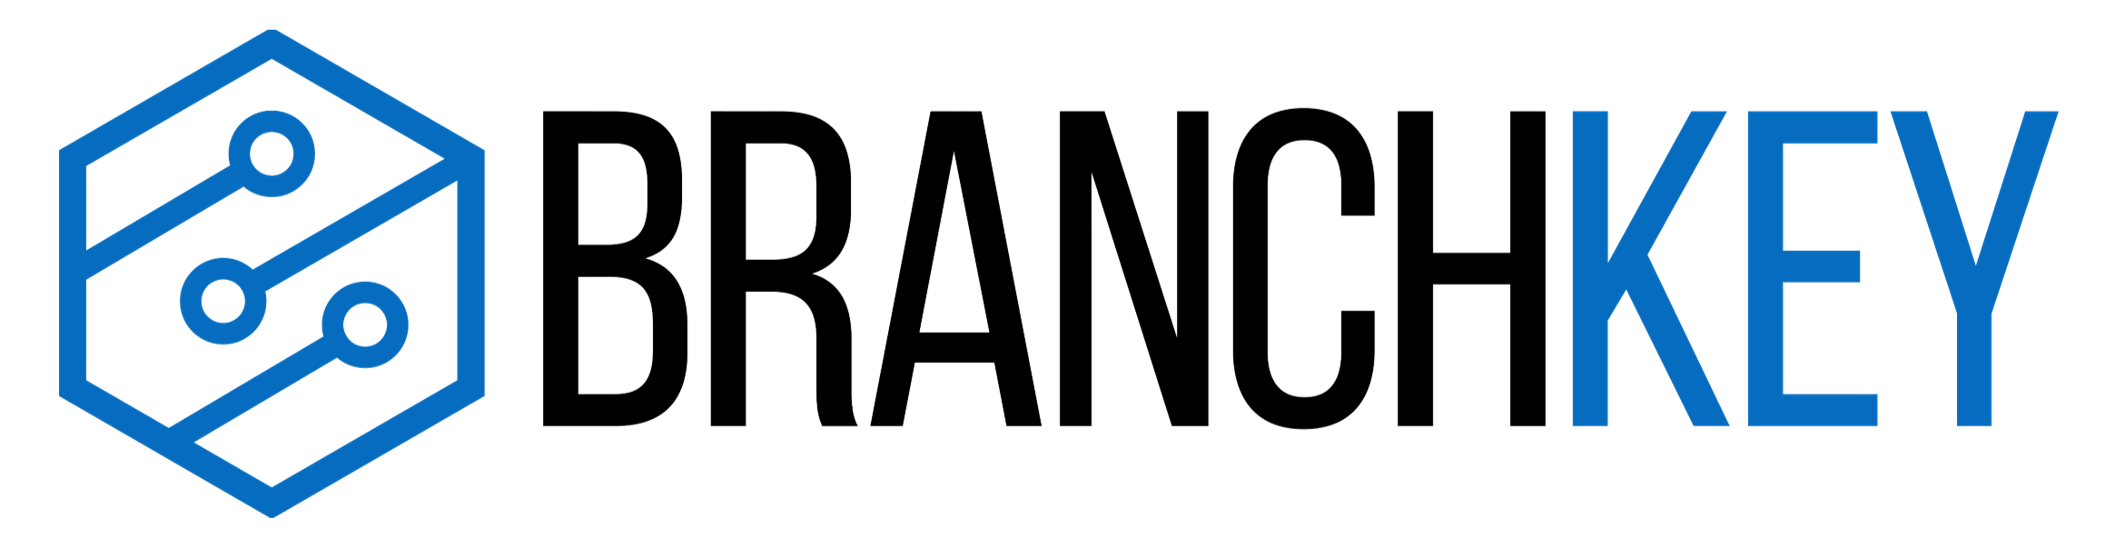 applitools-logo-300x55.png